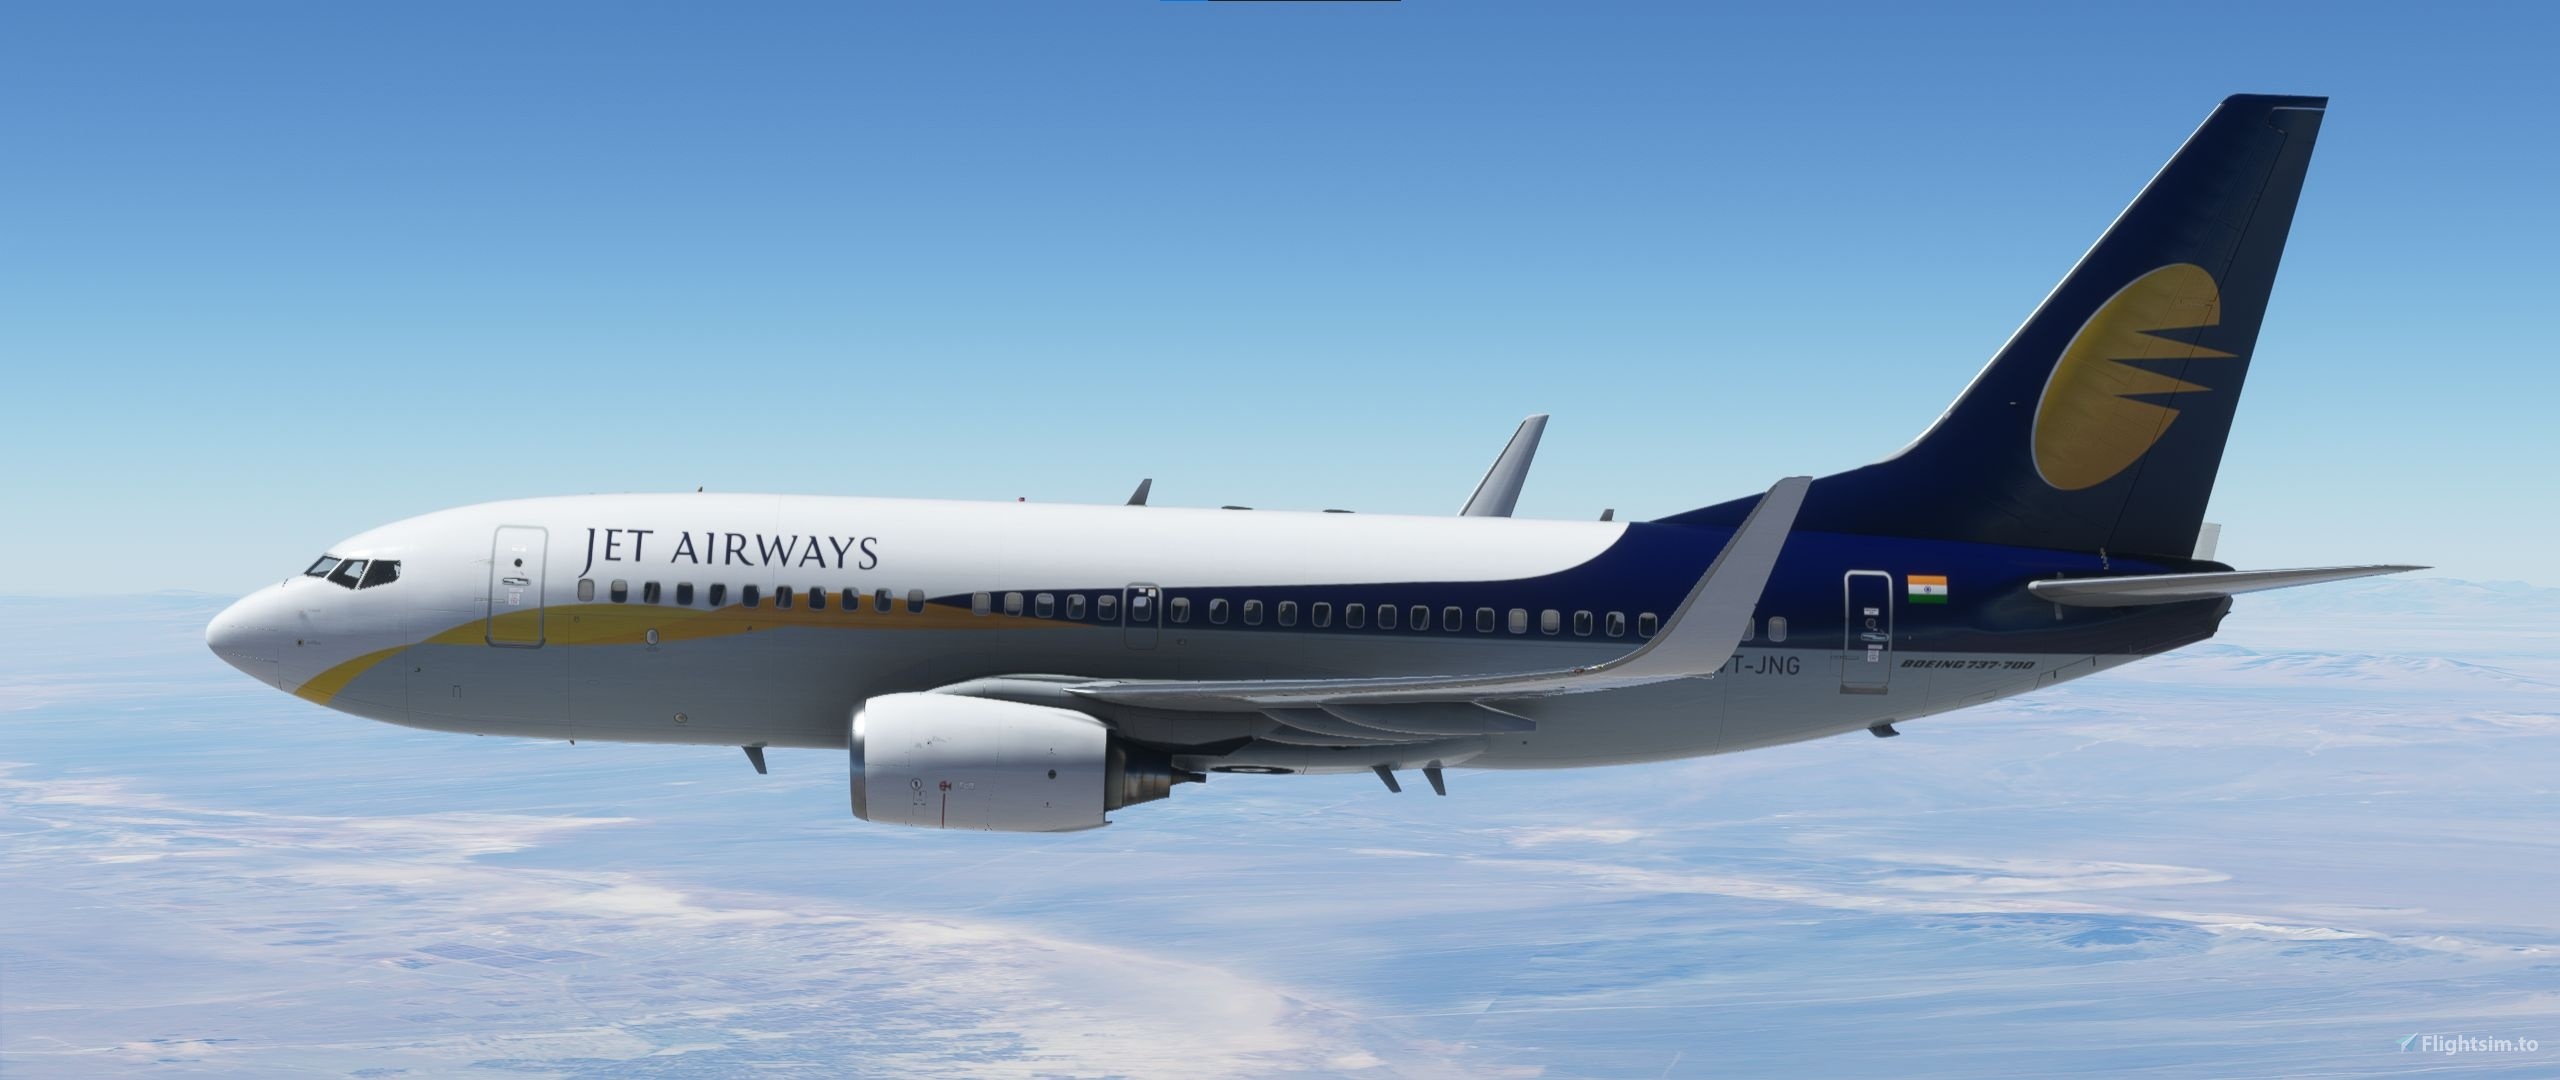 Jet Airways, pmdg 737, Jet Airways India, Microsoft Flight Simulator, 2560x1080 Dual Screen Desktop